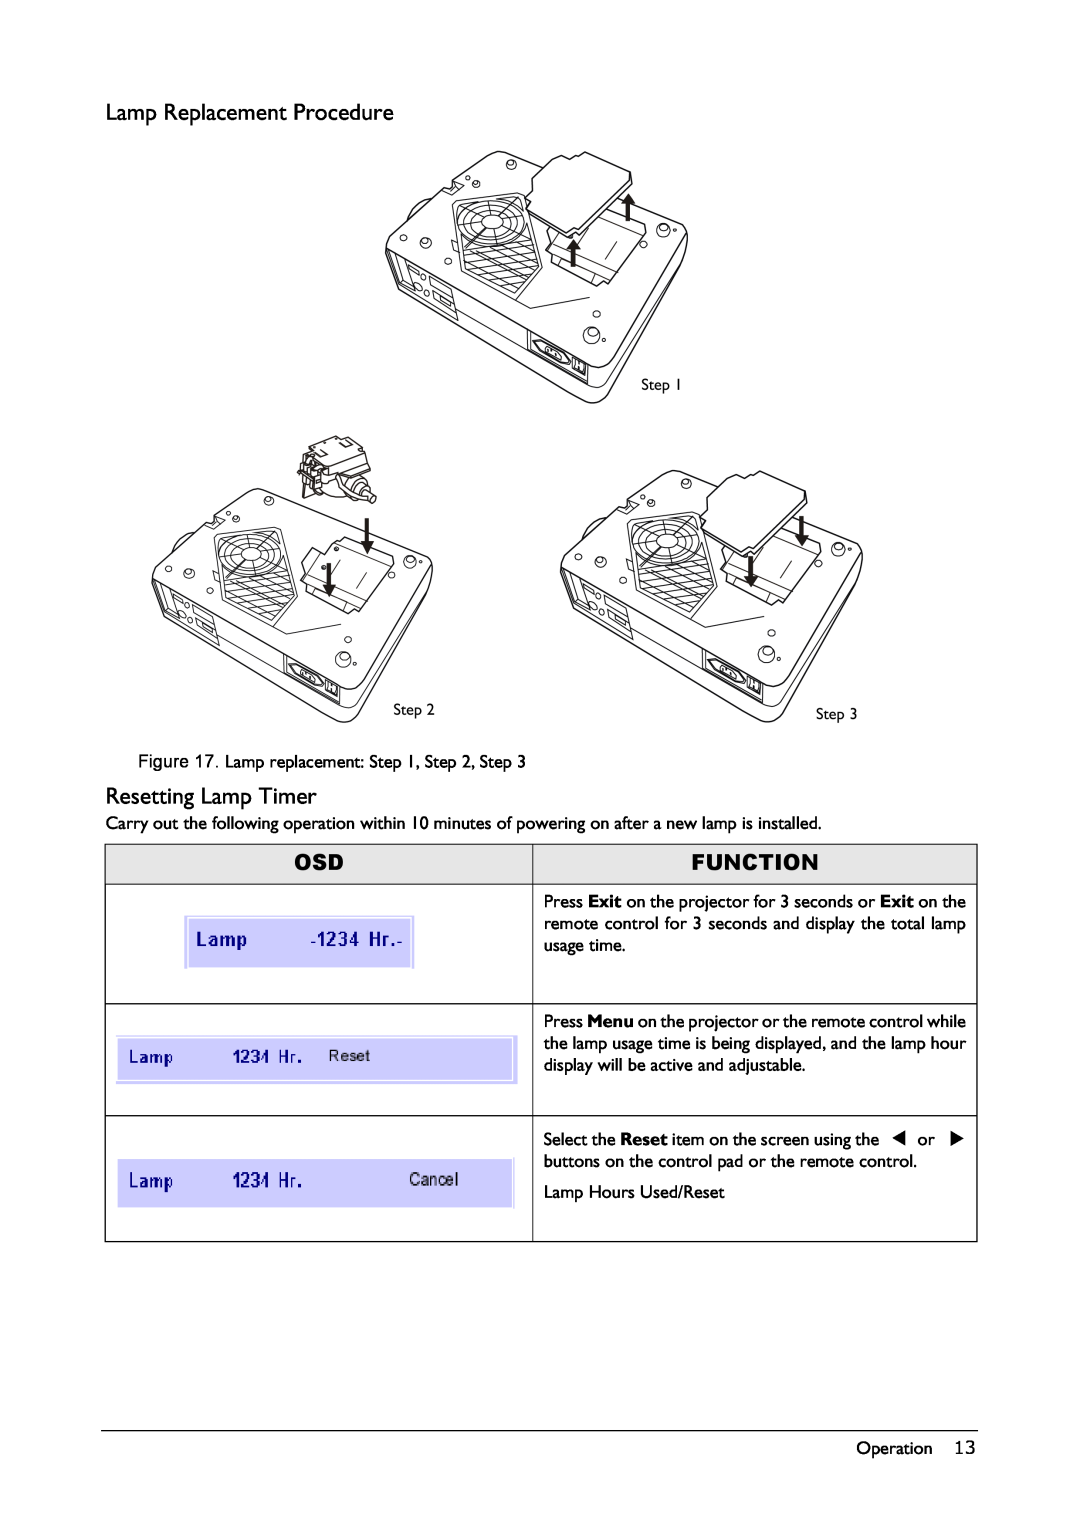 BenQ VP150X manual Lamp Replacement Procedure, Resetting Lamp Timer, Function, Step 